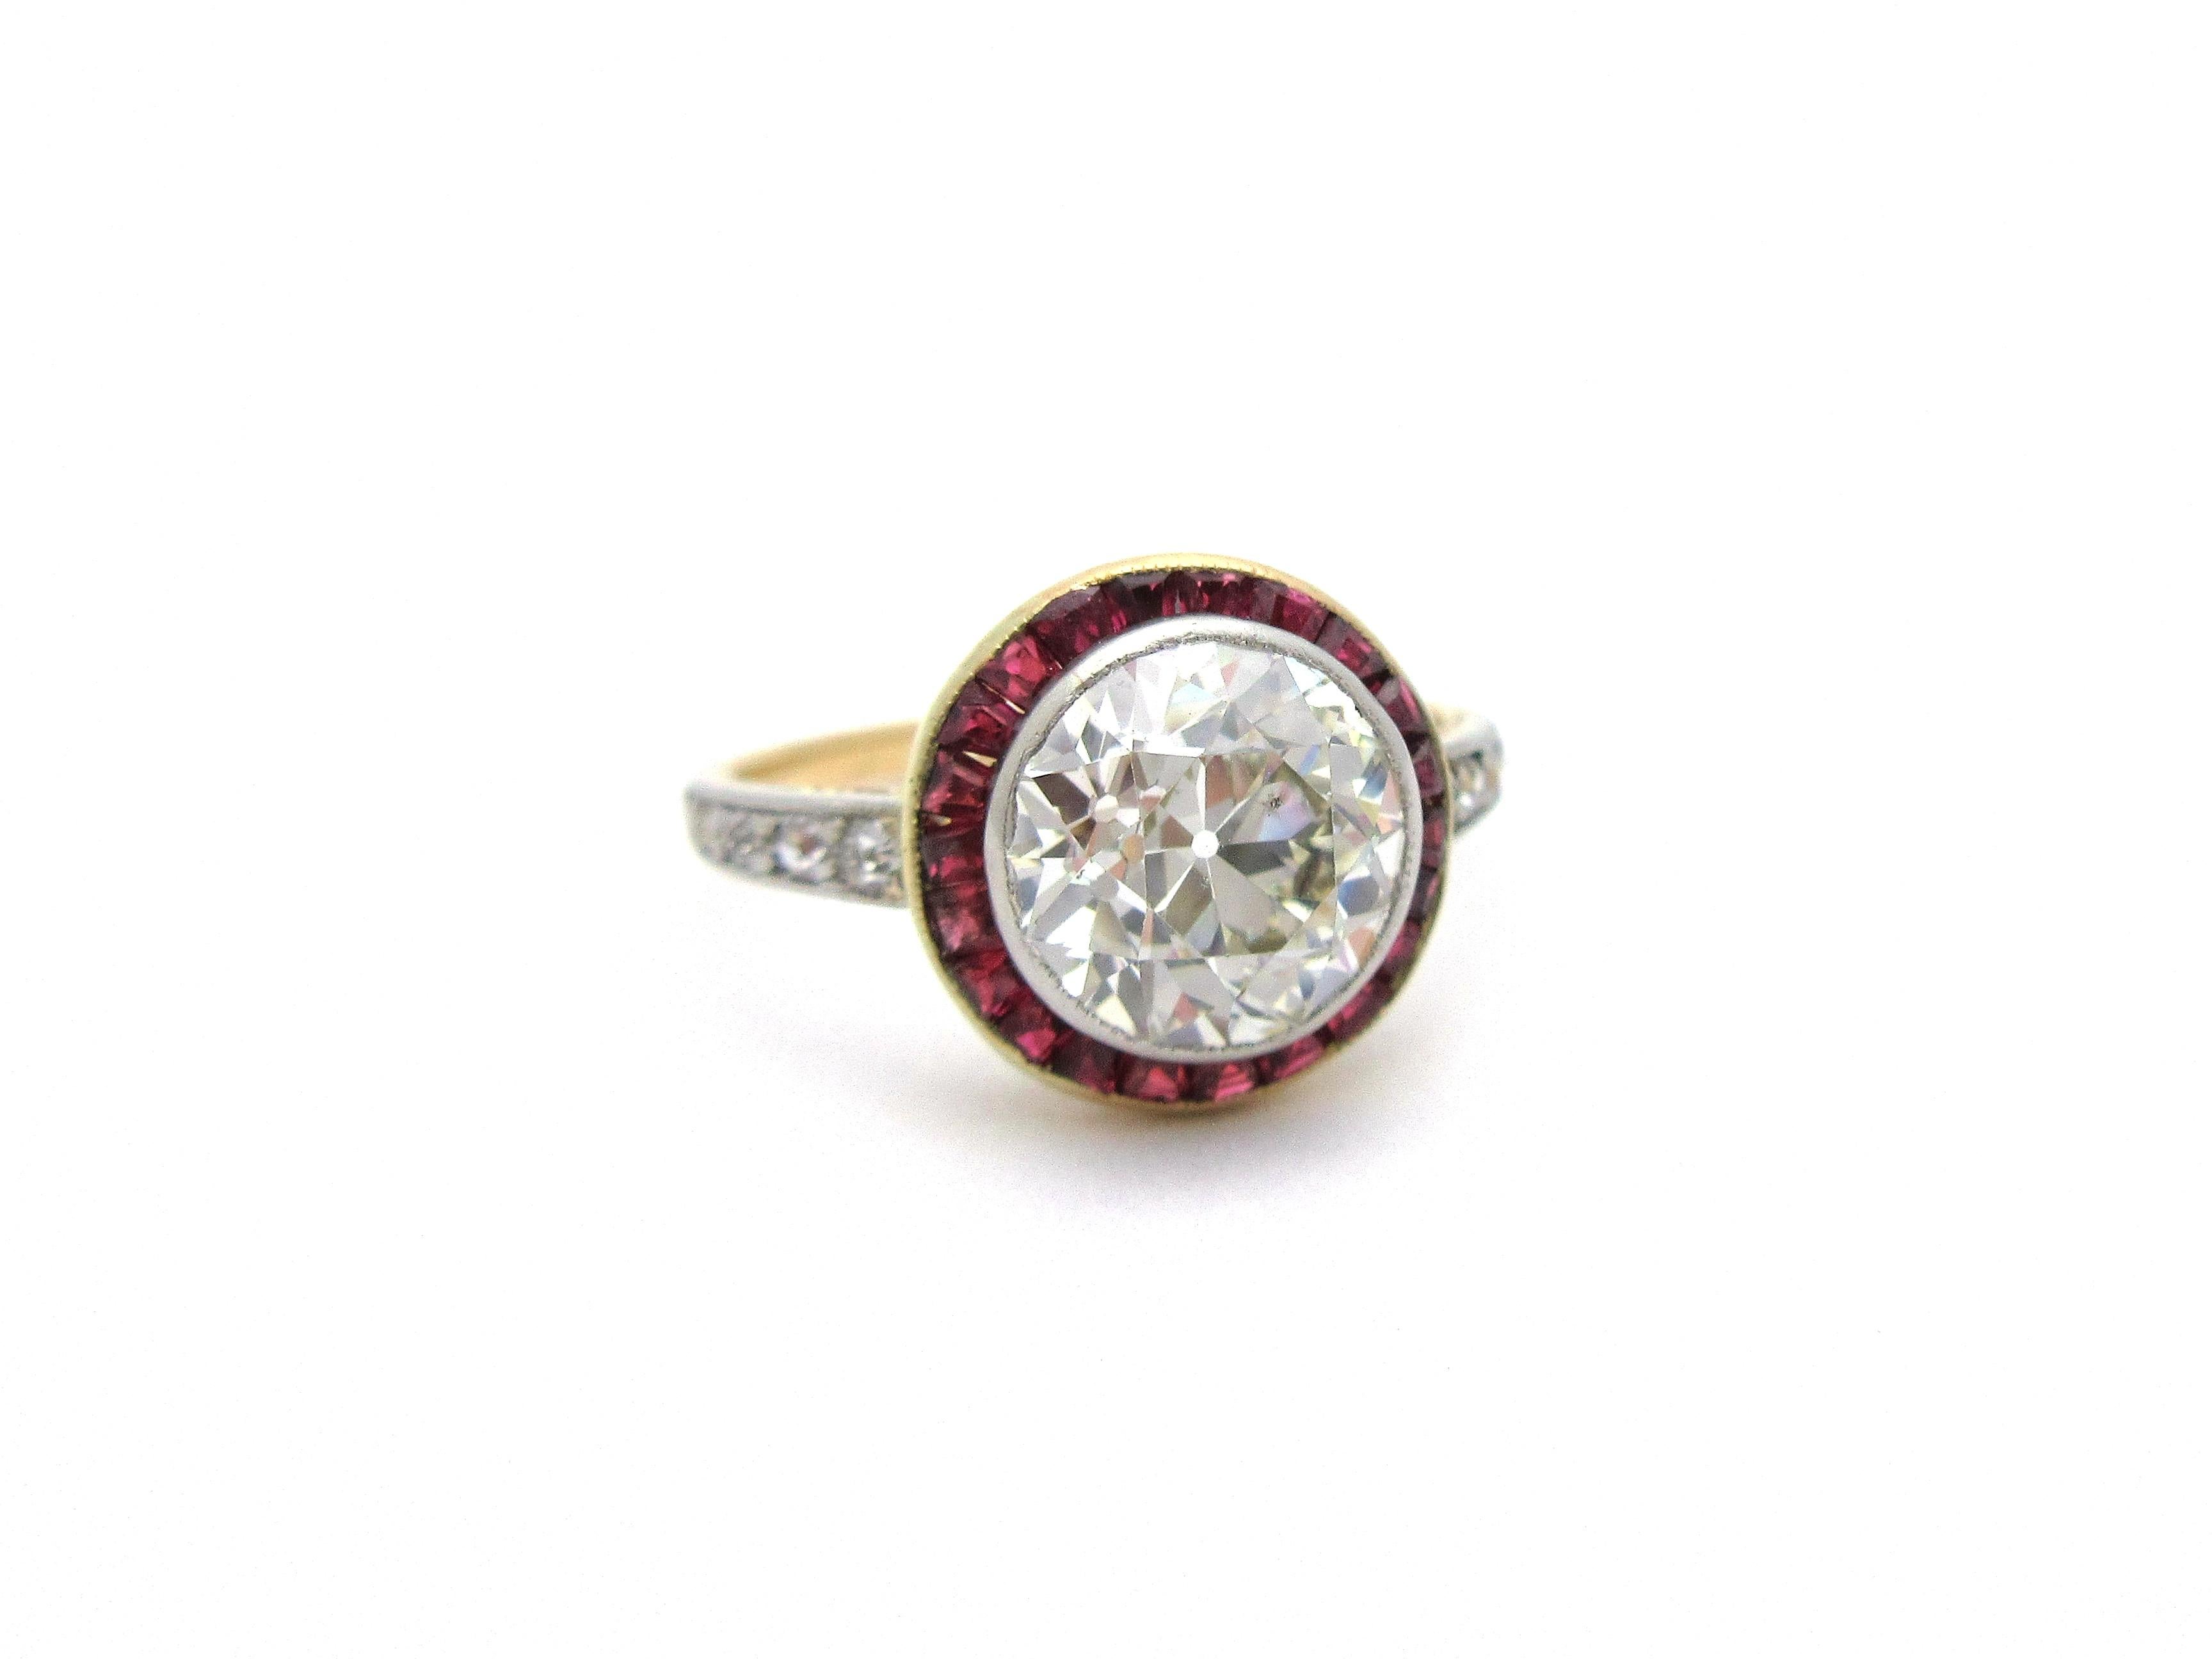 Old European Cut Antique Art Deco European Cut Diamond with Ruby Halo Engagement Ring 18 Karat